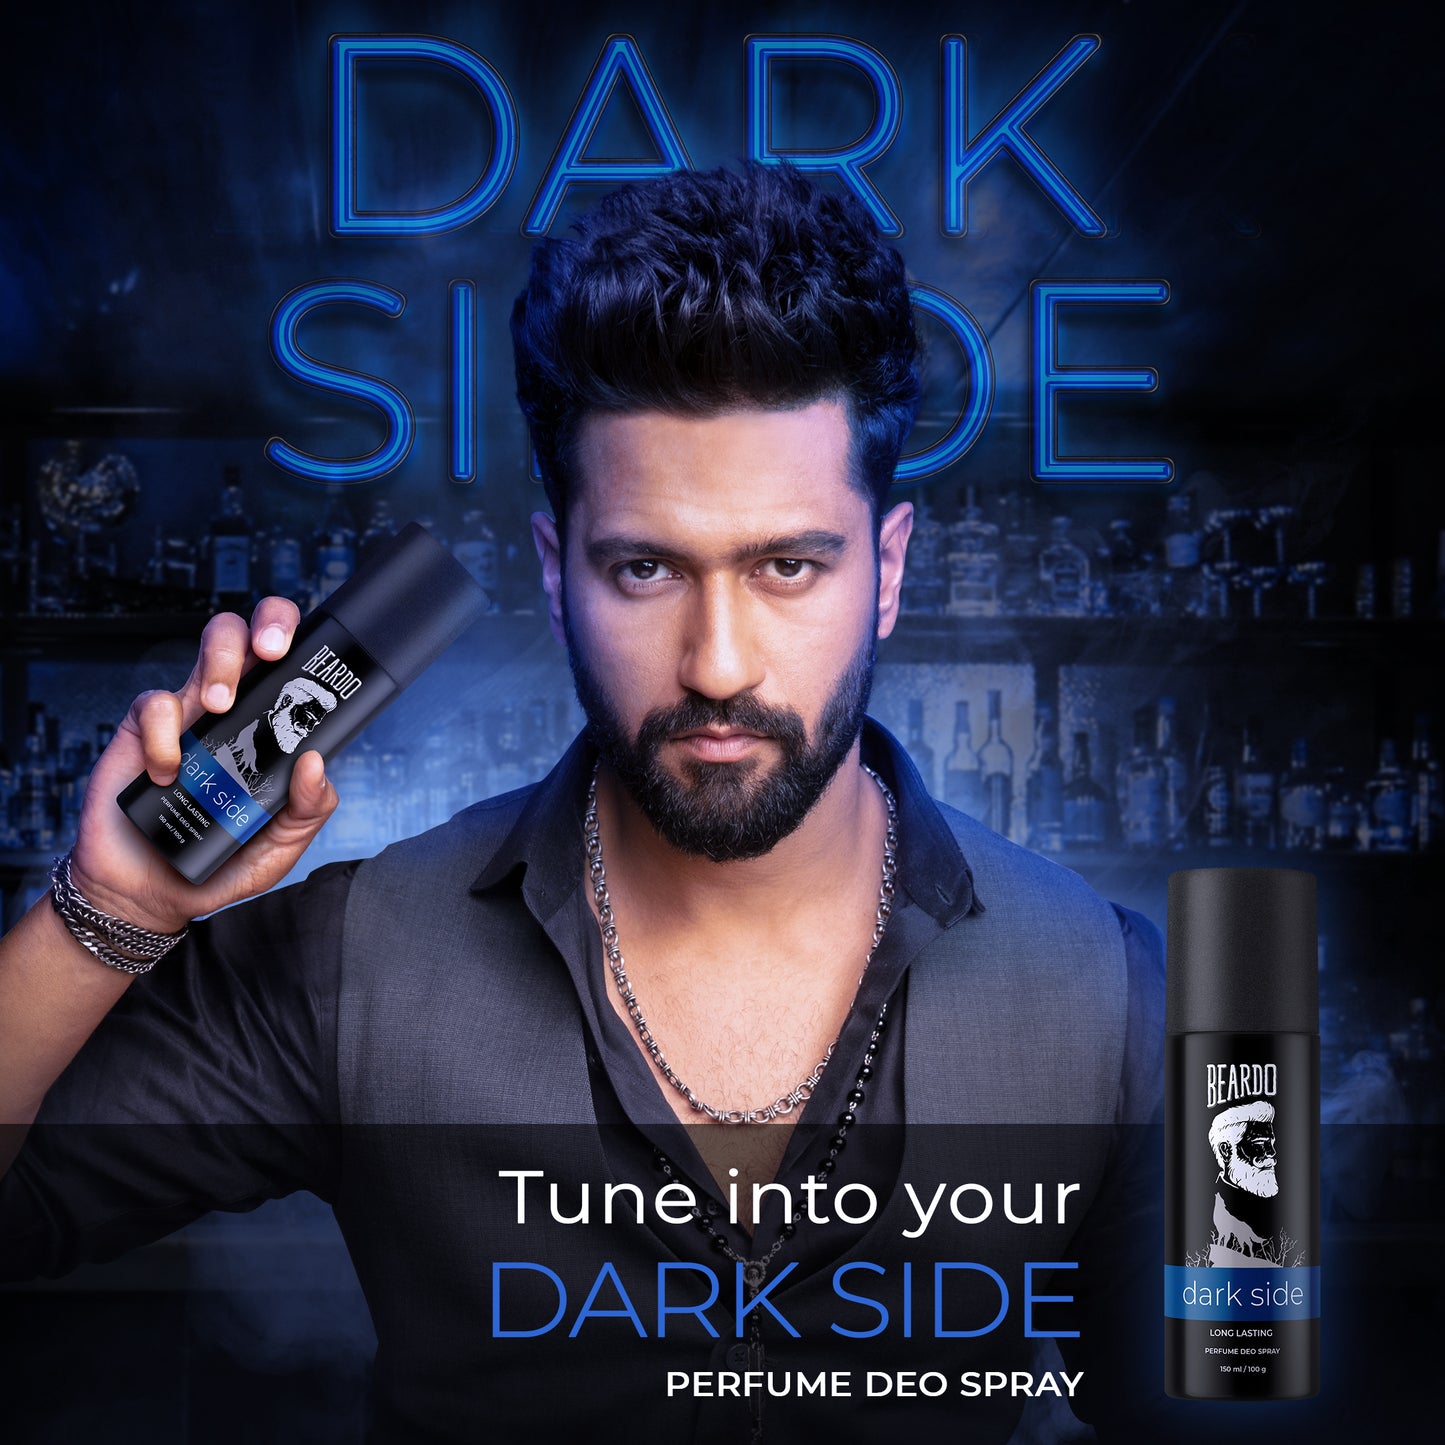 dark side perfume deo spray, beardo dark side, beardo dark side perfume deo spray